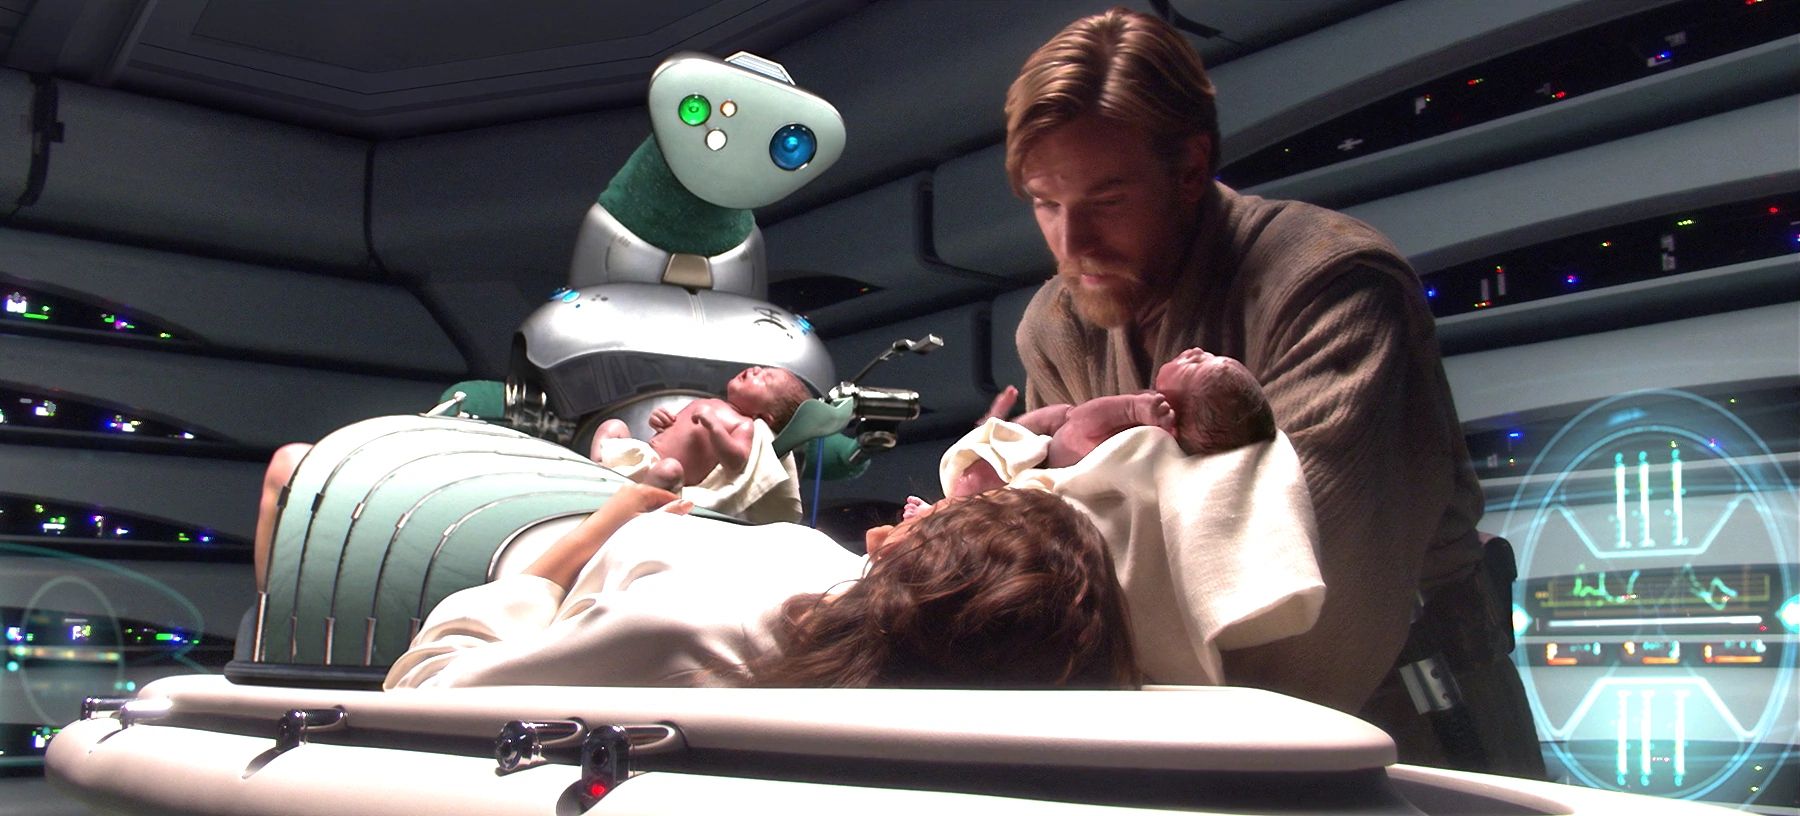 Padme Amidala in childbirth with Obi-Wan Kenobi beside her